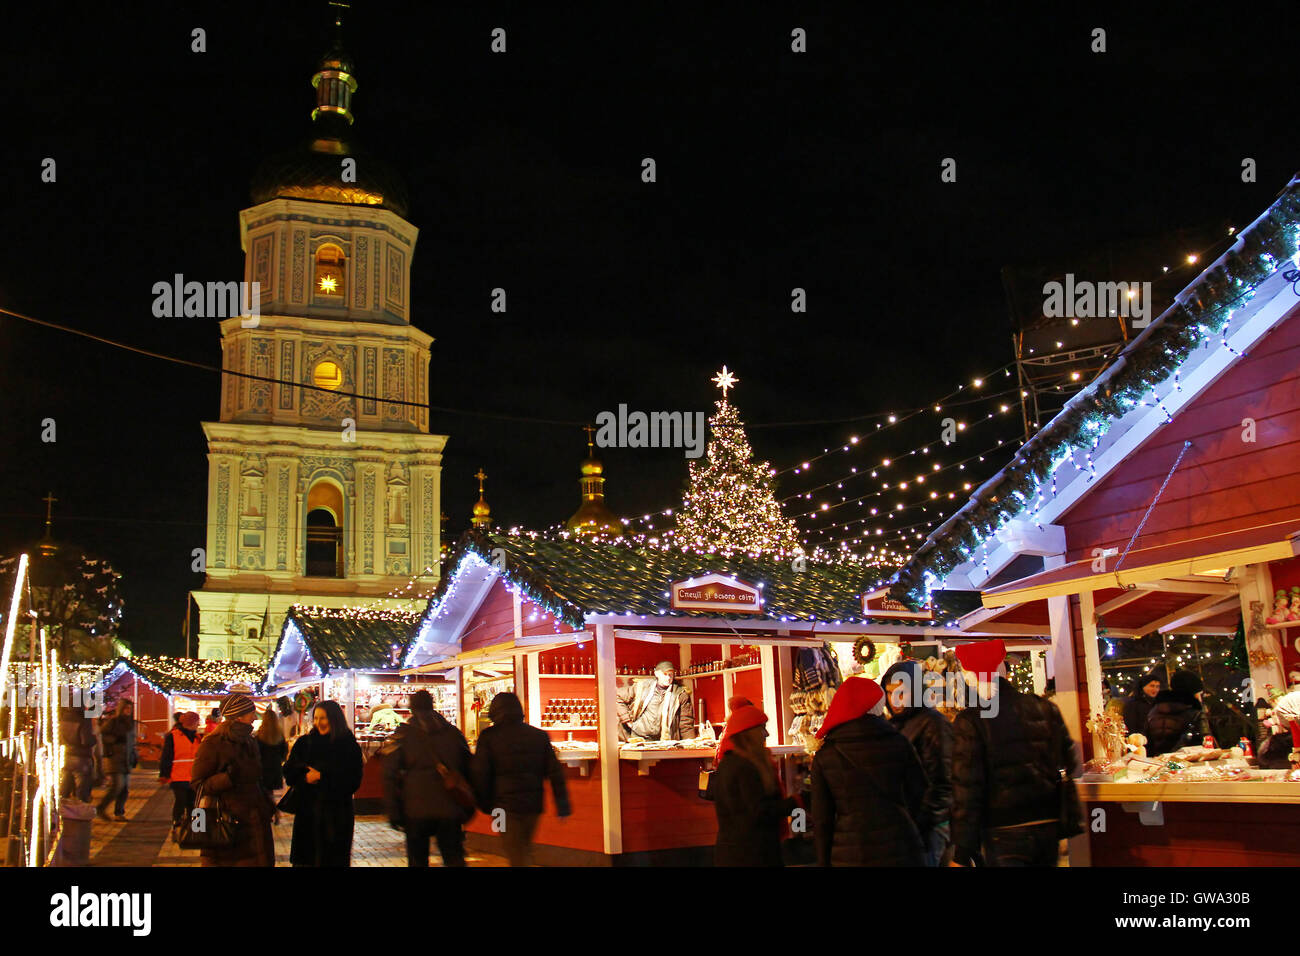 KYIV, UKRAINE - DECEMBER 25, 2014: St. Sophia Cathedral and Christmas market on Sophia Square in Kyiv Stock Photo